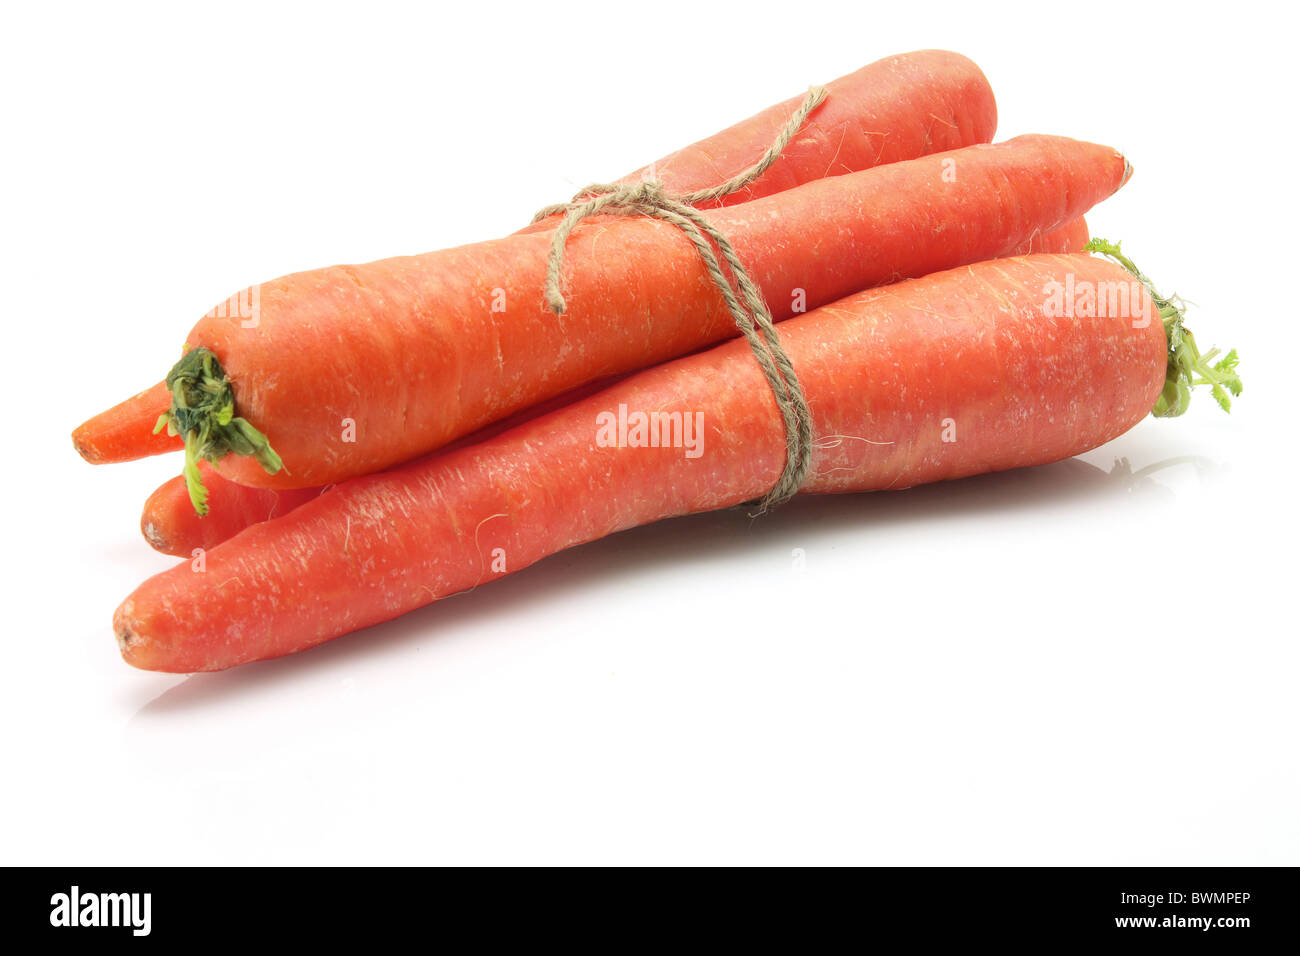 Bundle of Carrots Stock Photo